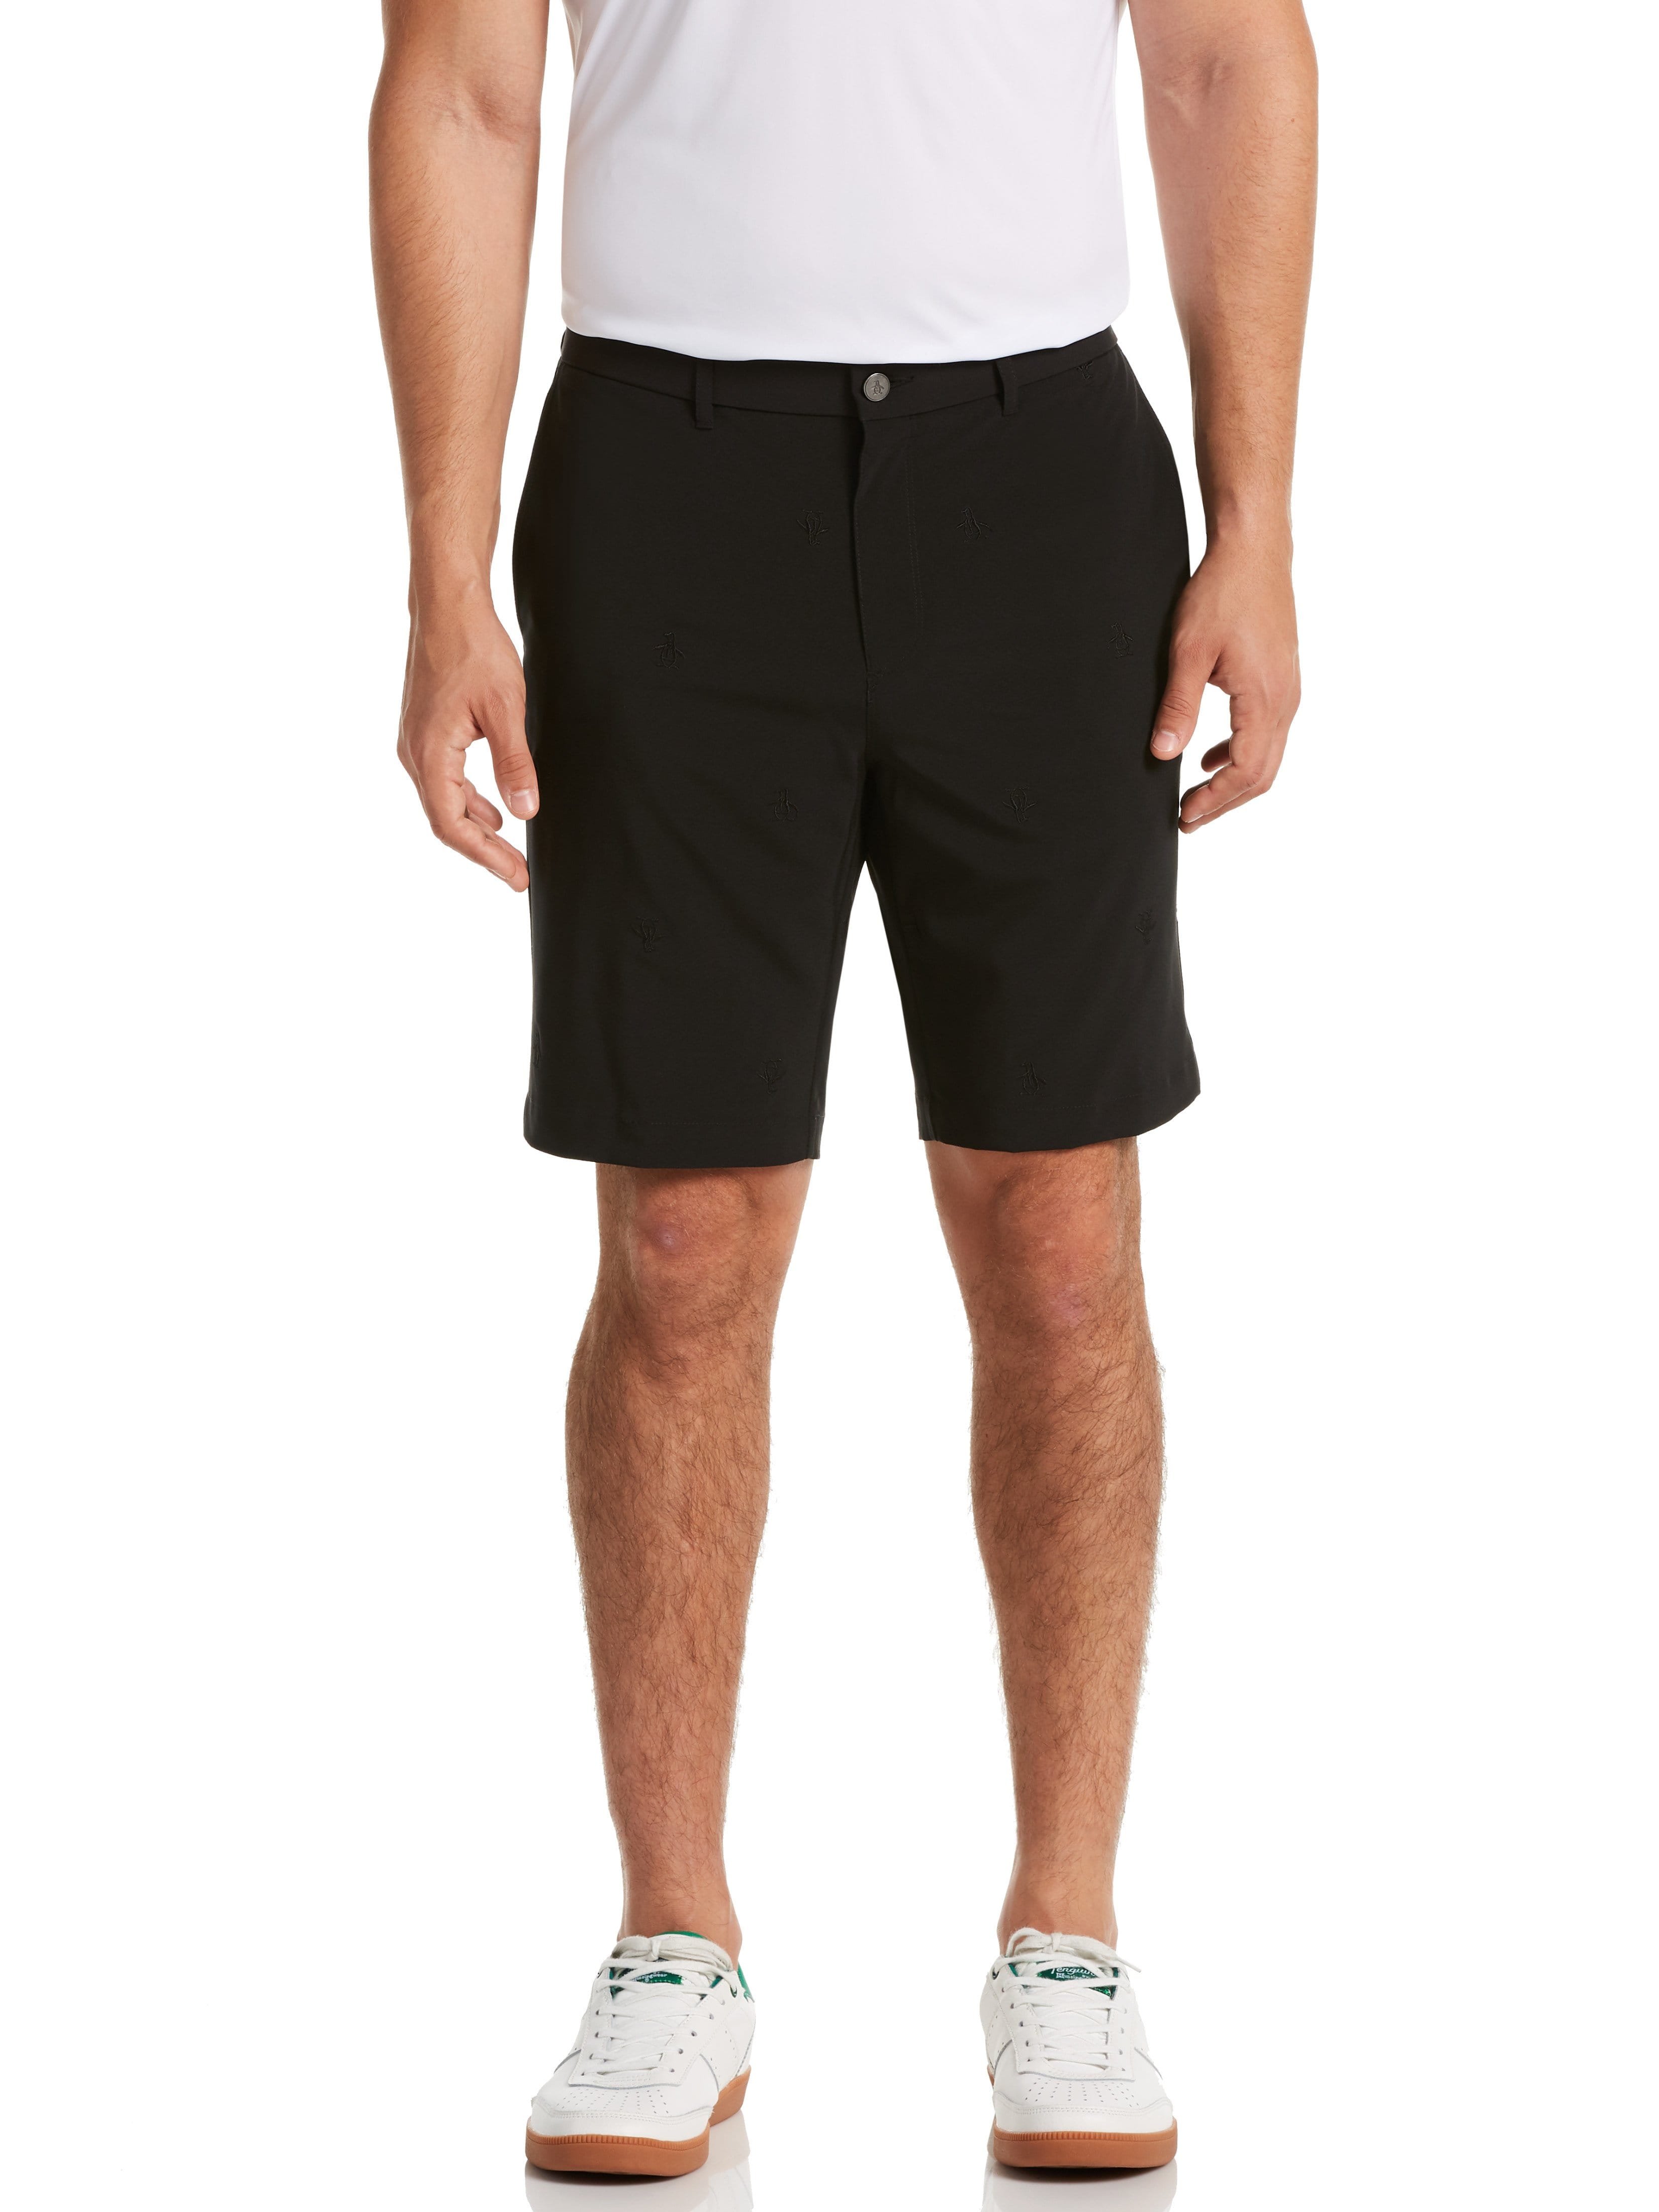 Original Penguin Mens Allover Pete Embroidered Golf Shorts, Size 38, Black, Polyester/Spandex | Golf Apparel Shop